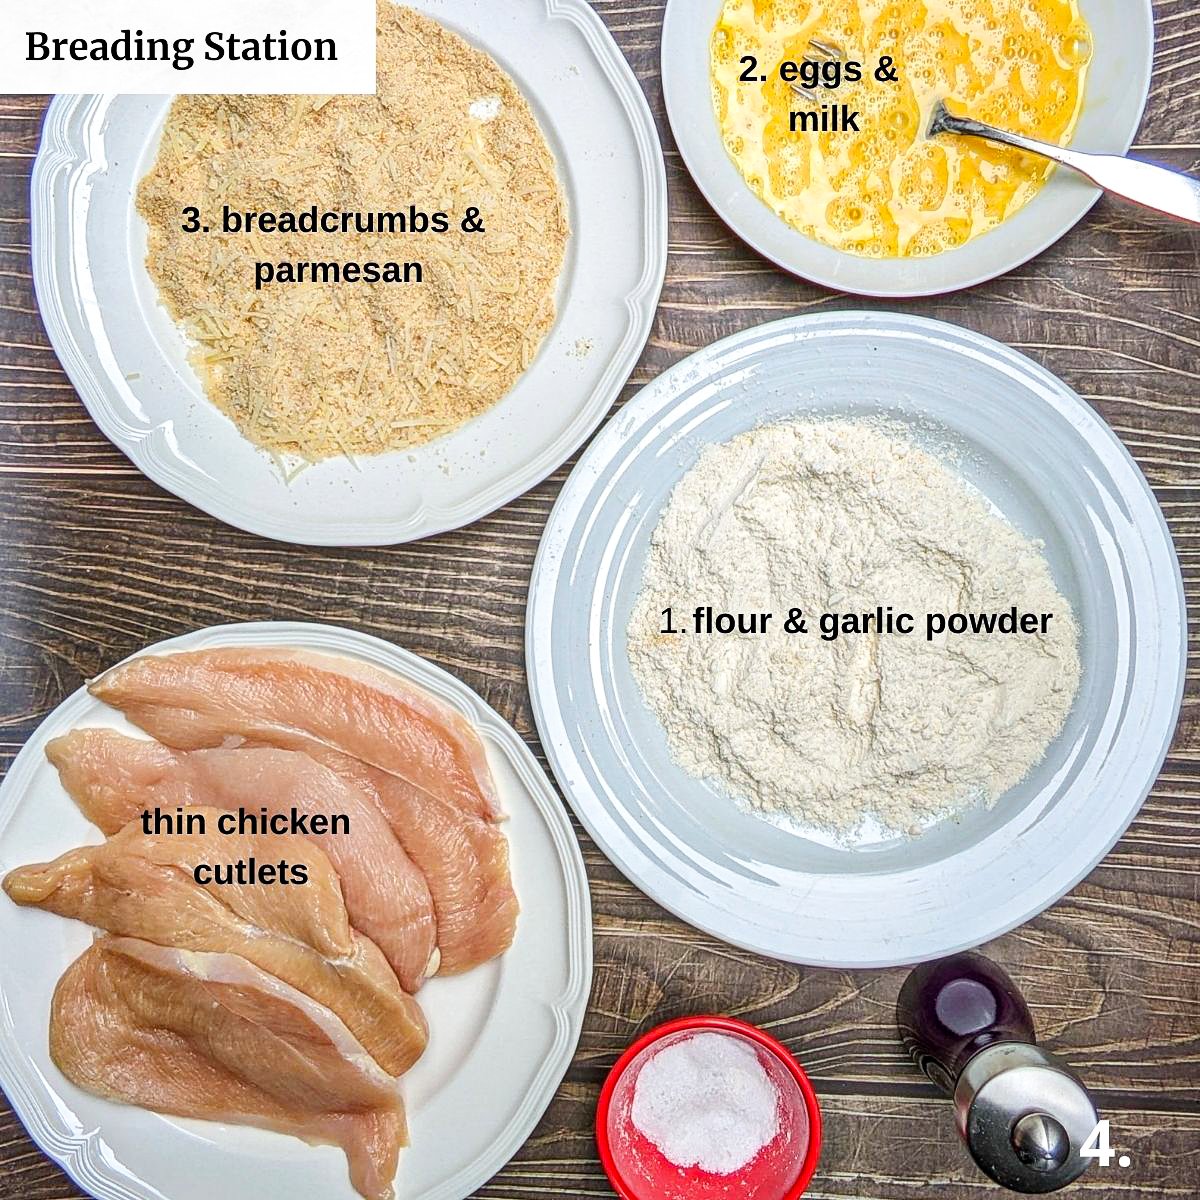 Ingredients to bread chicken cutlets.